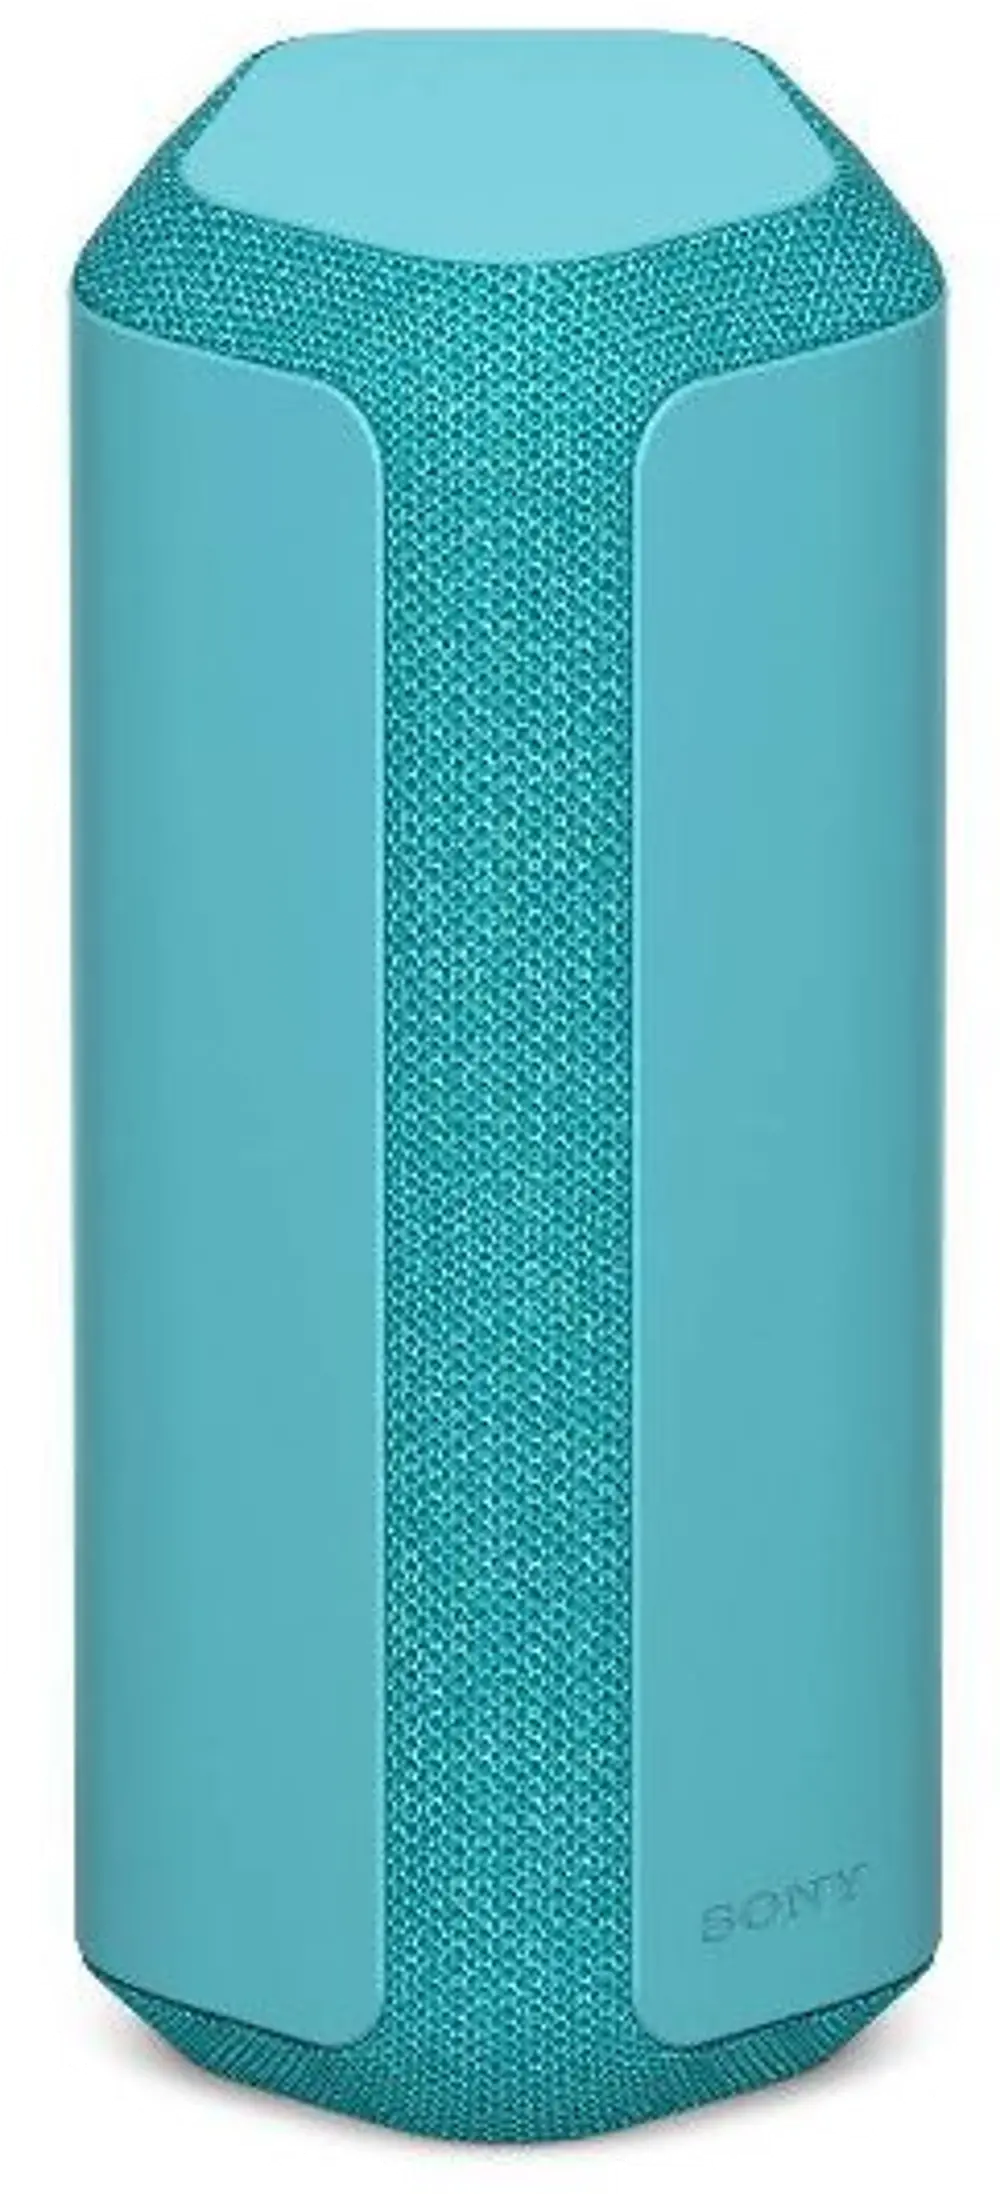 SRSXE300/L BLUE Sony SRSXE300 Portable X-Series Bluetooth Speaker - Blue-1